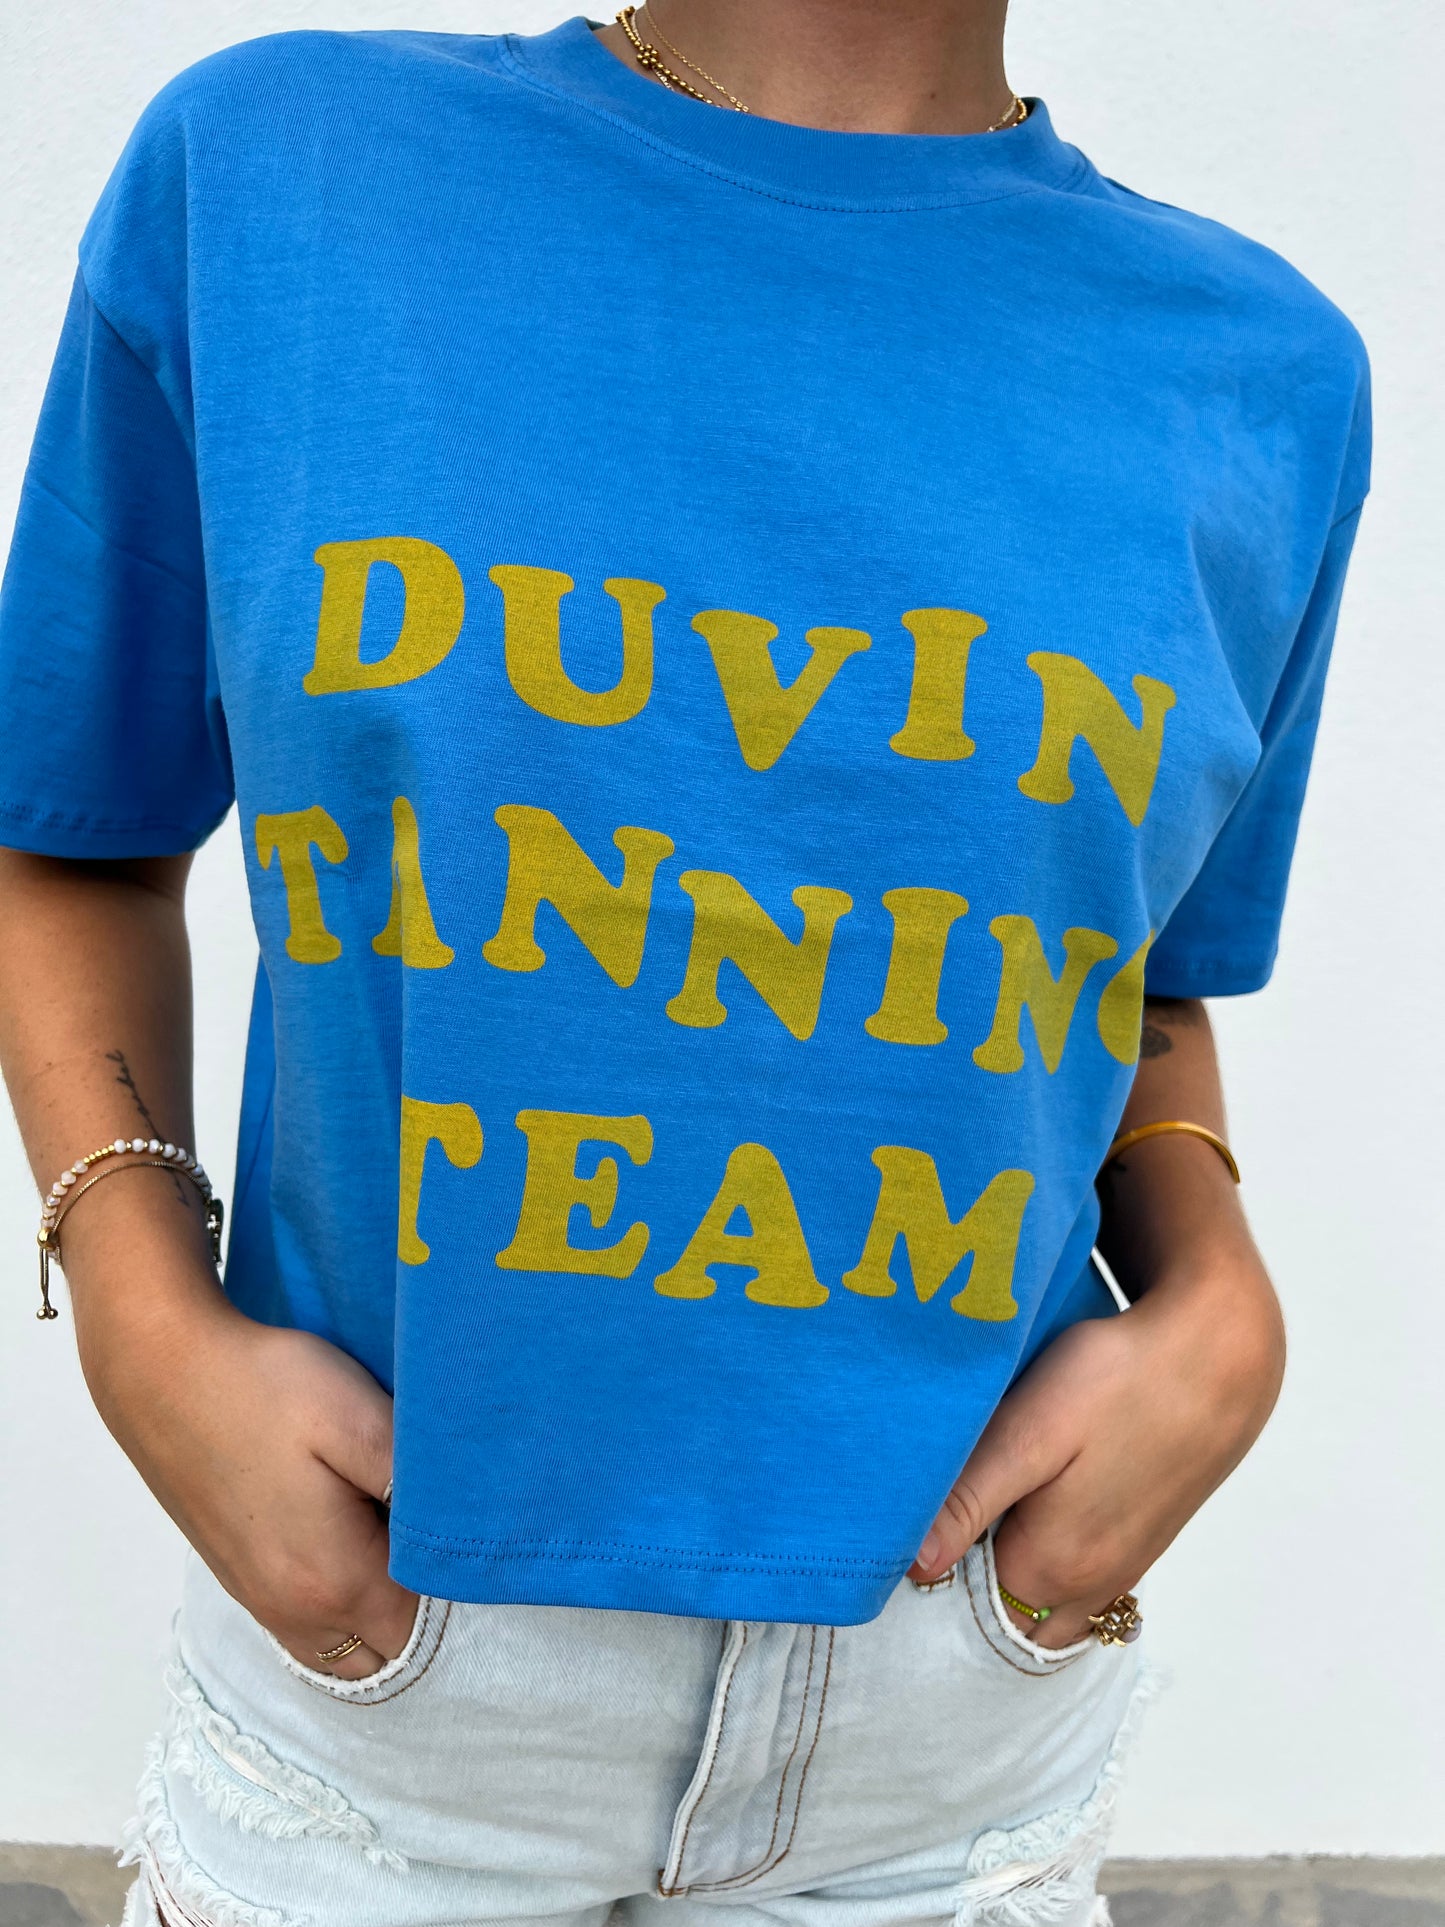 Duvin Womens Tanning Team Crop Tee - Blue